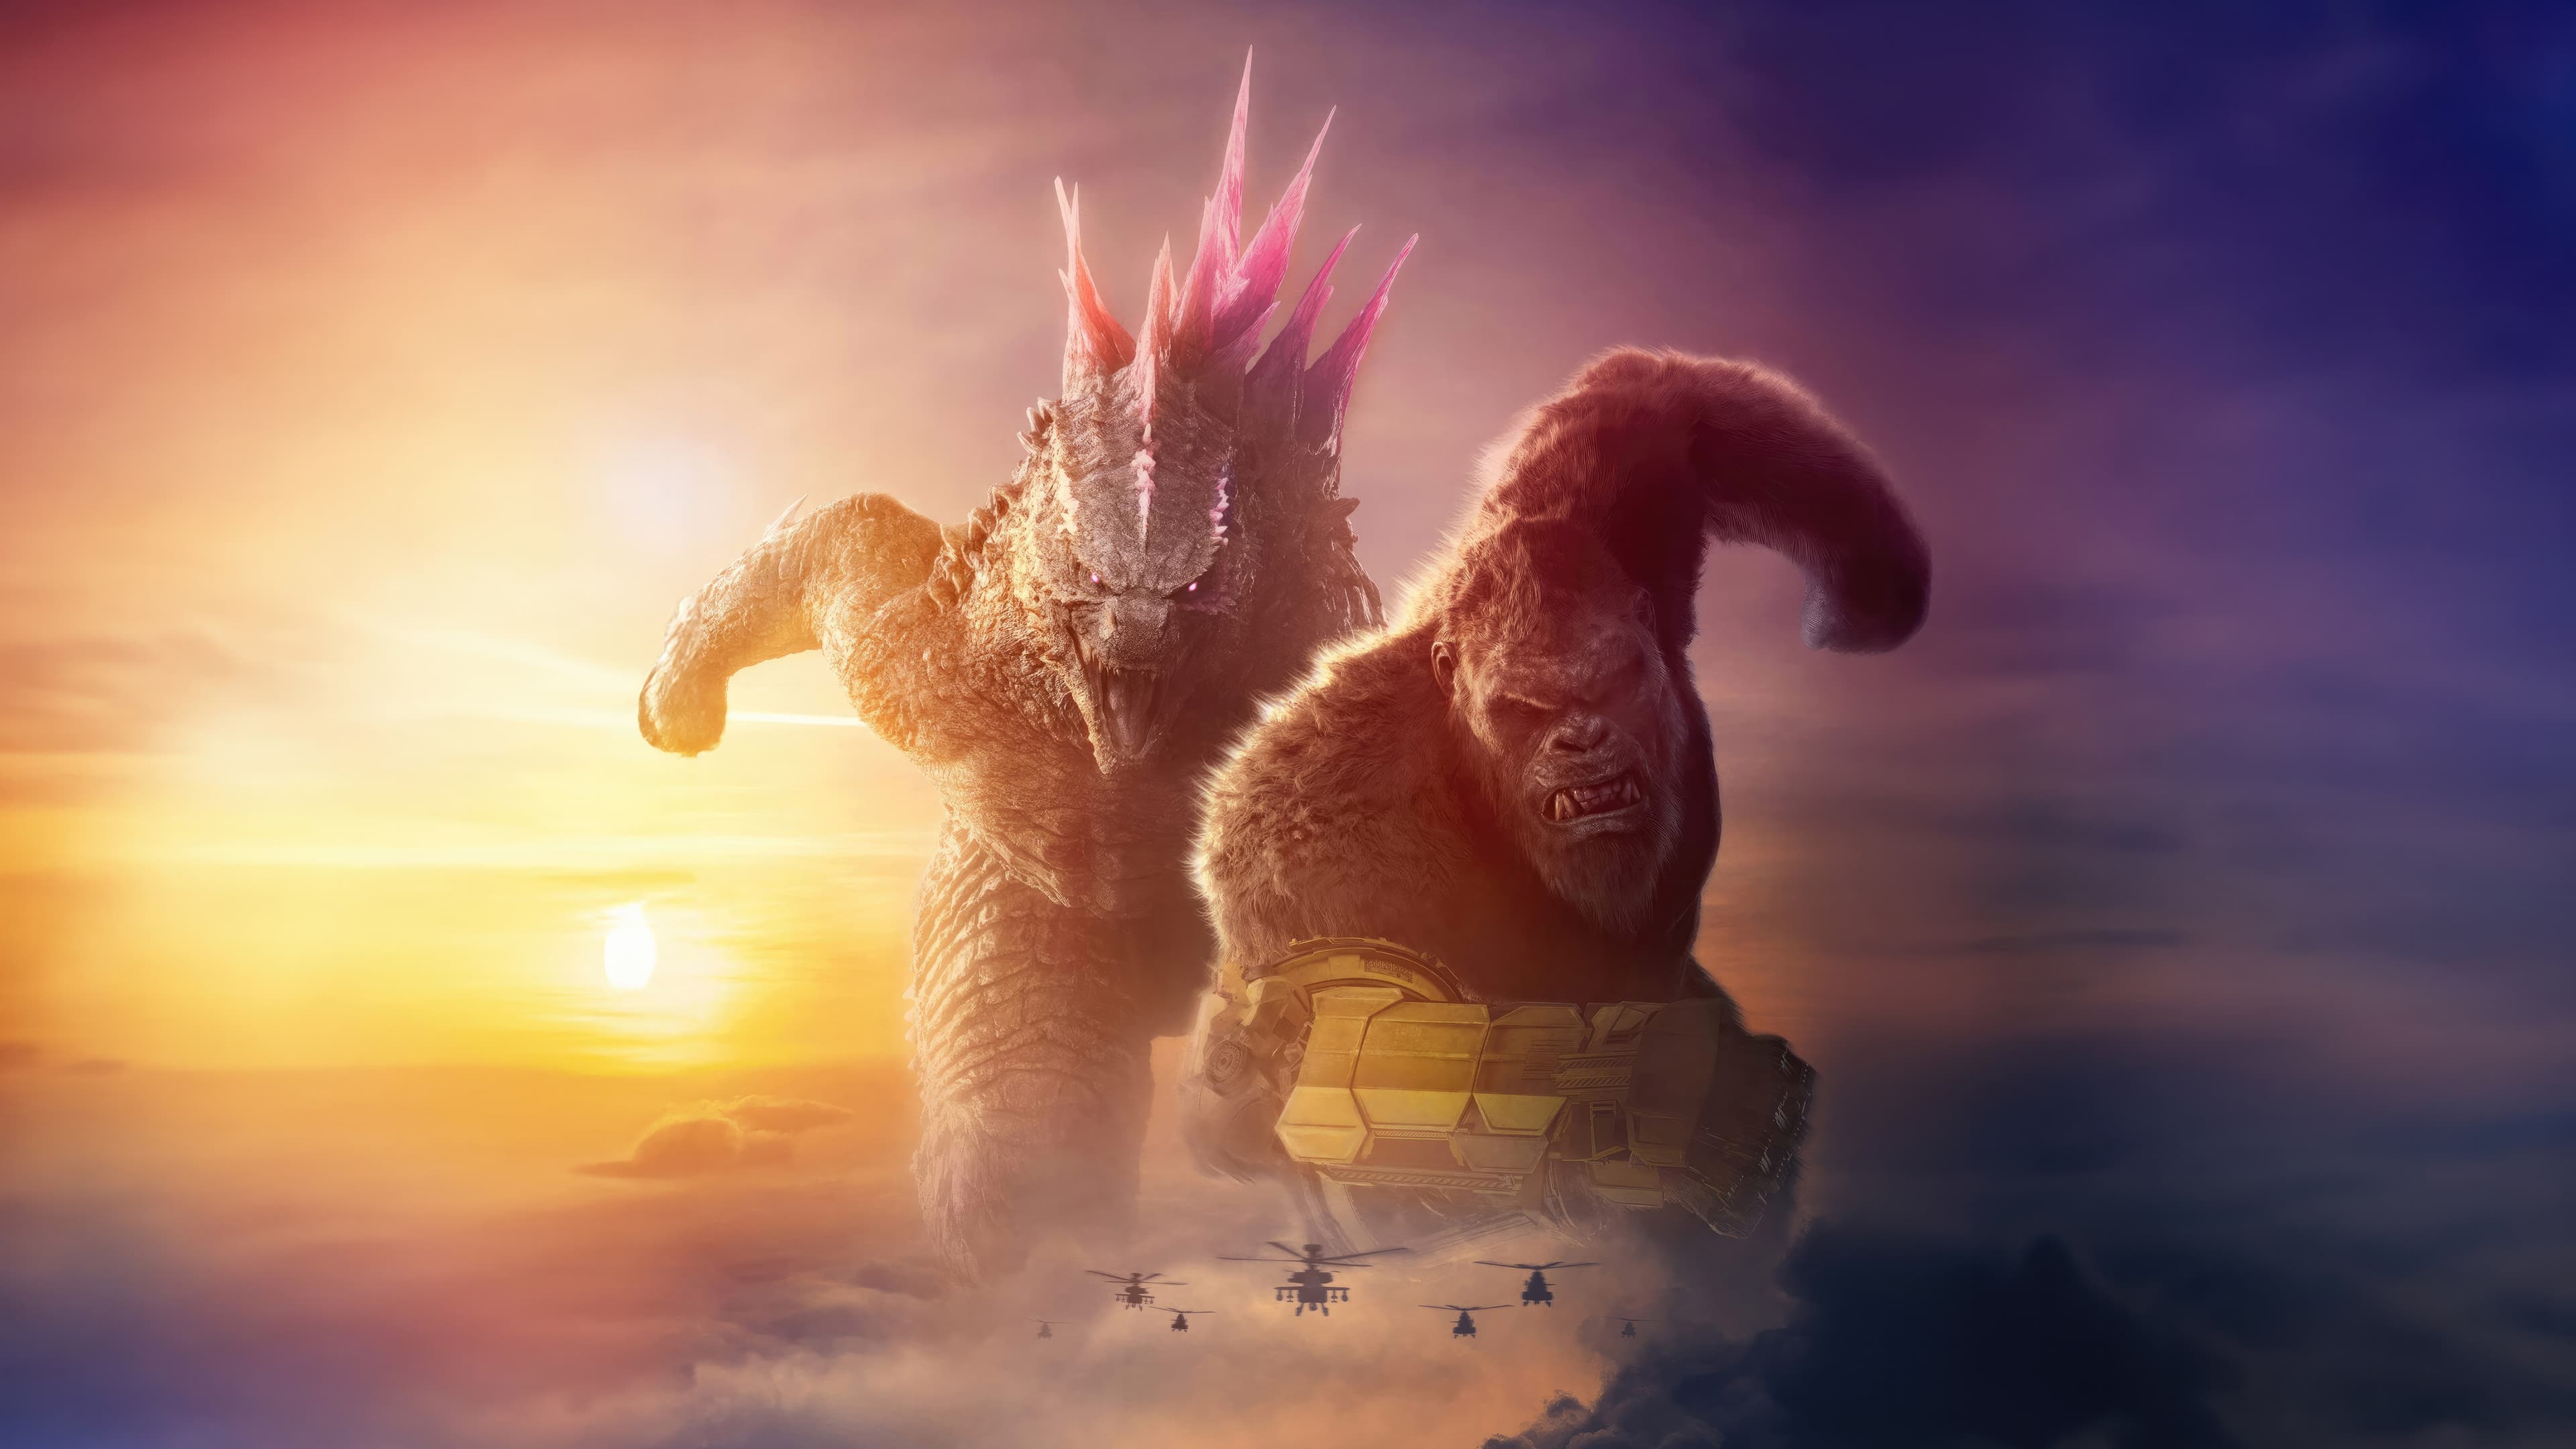 Godzilla x Kong: Un nou imperiu